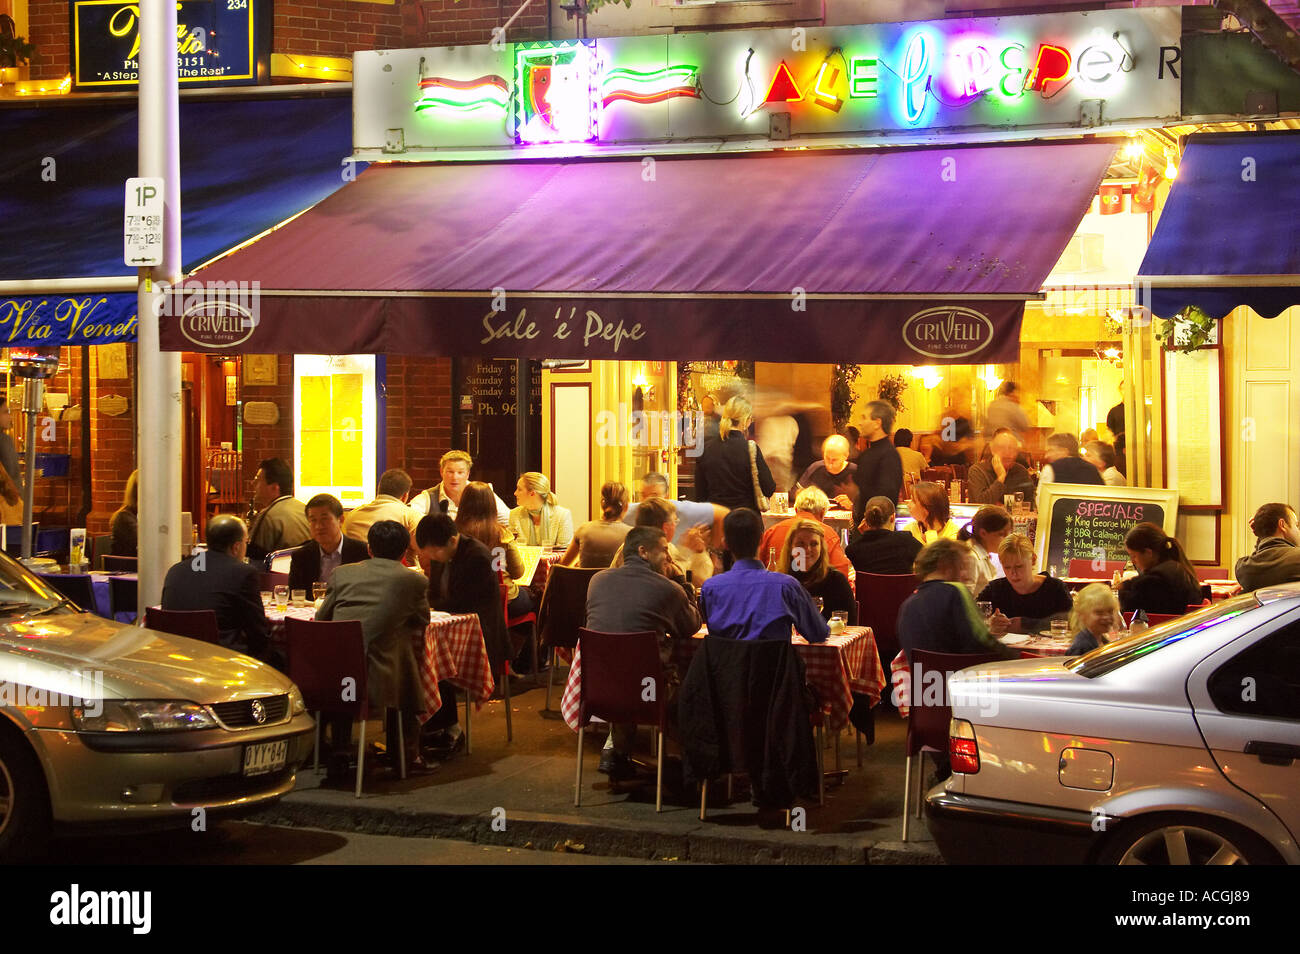 Sale e Pepe Restaurant Lygon Street Melbourne Victoria Australia Stock Photo